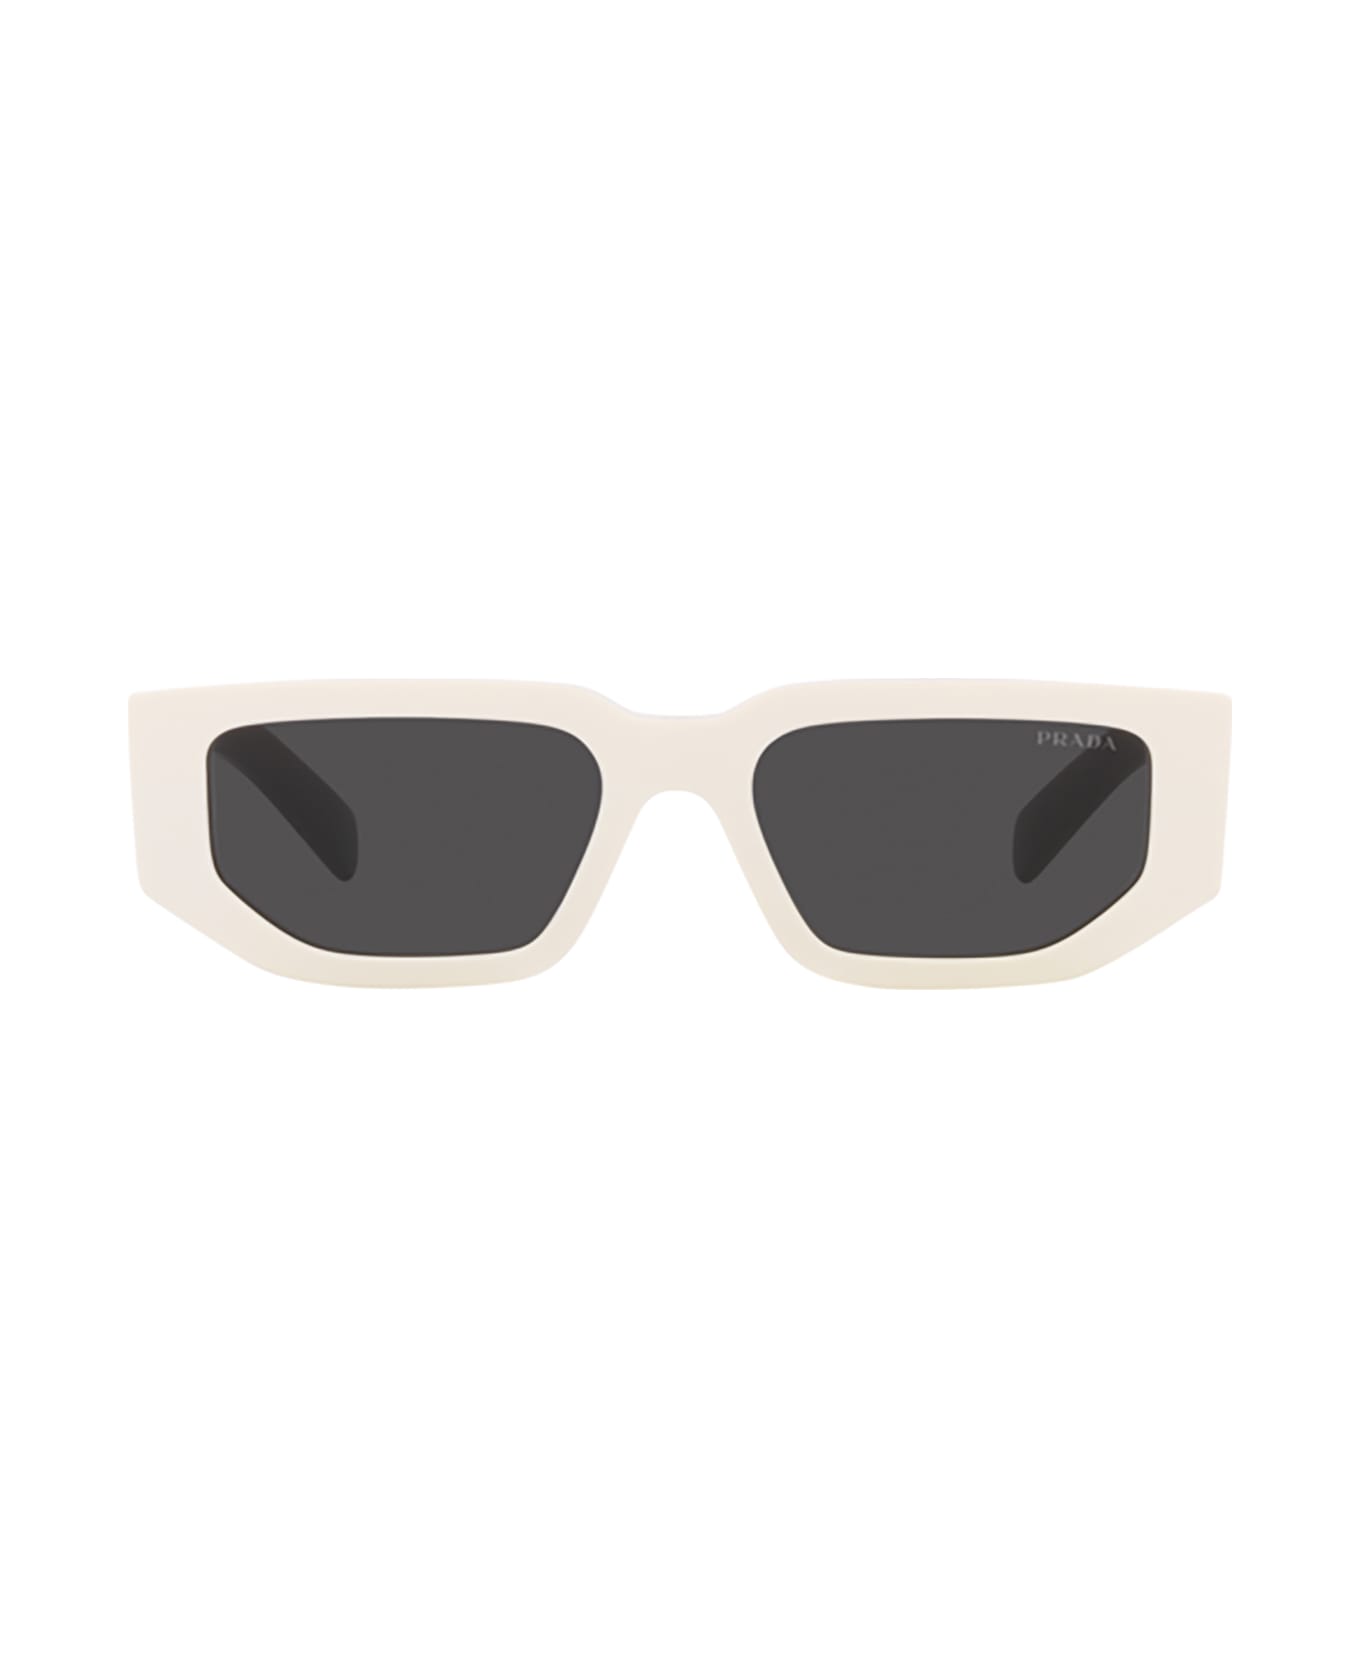 Prada Eyewear Pr 09zs Talc Sunglasses - Talc サングラス